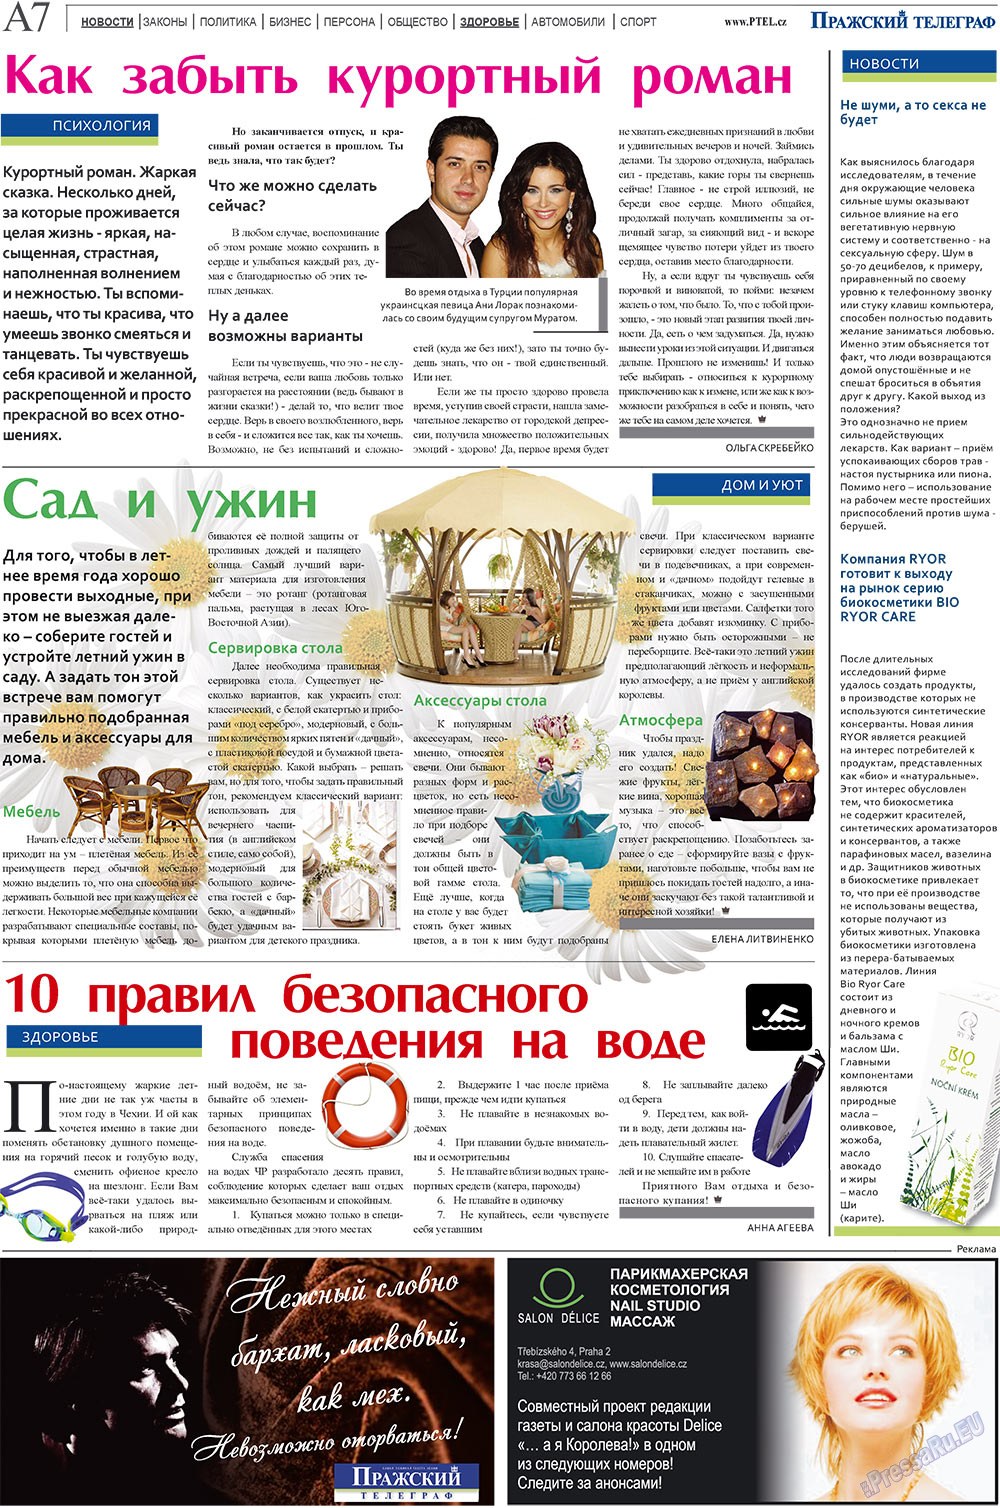 Пражский телеграф, газета. 2009 №15 стр.7